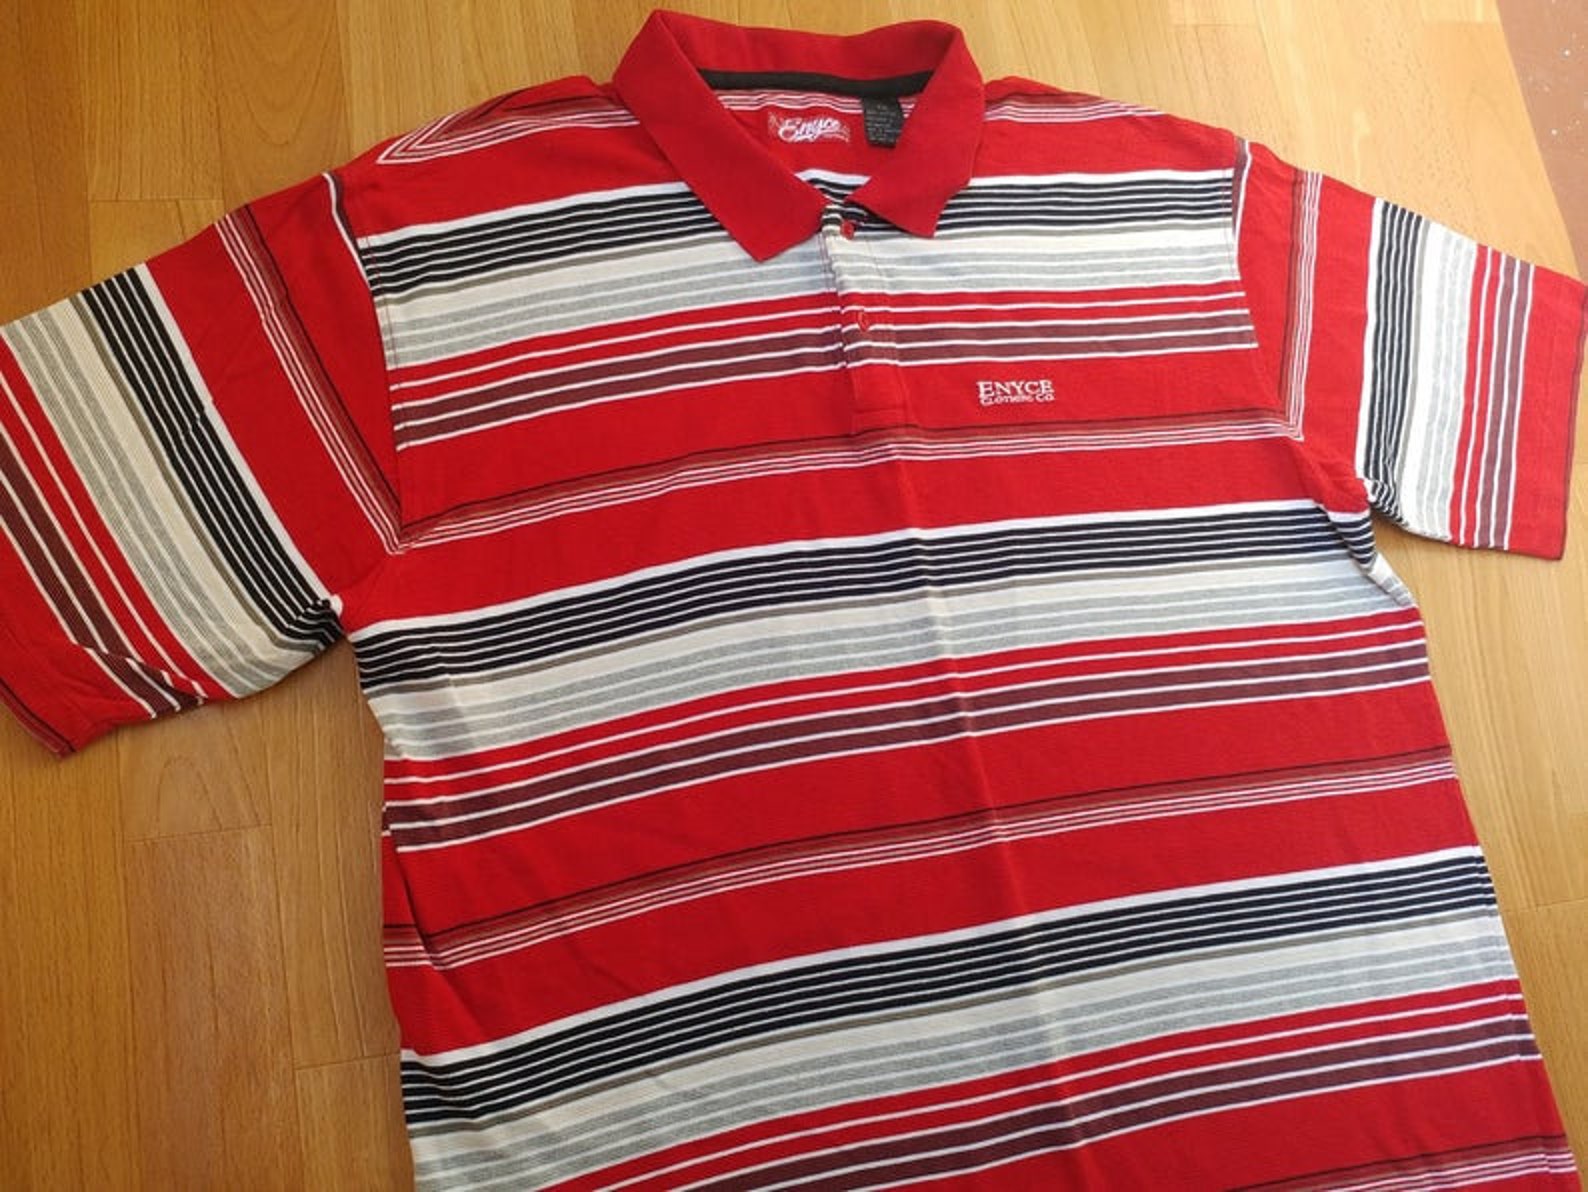 Enyce Shirt Vintage Hip-hop Shirt Red Striped Polo Shirt - Etsy